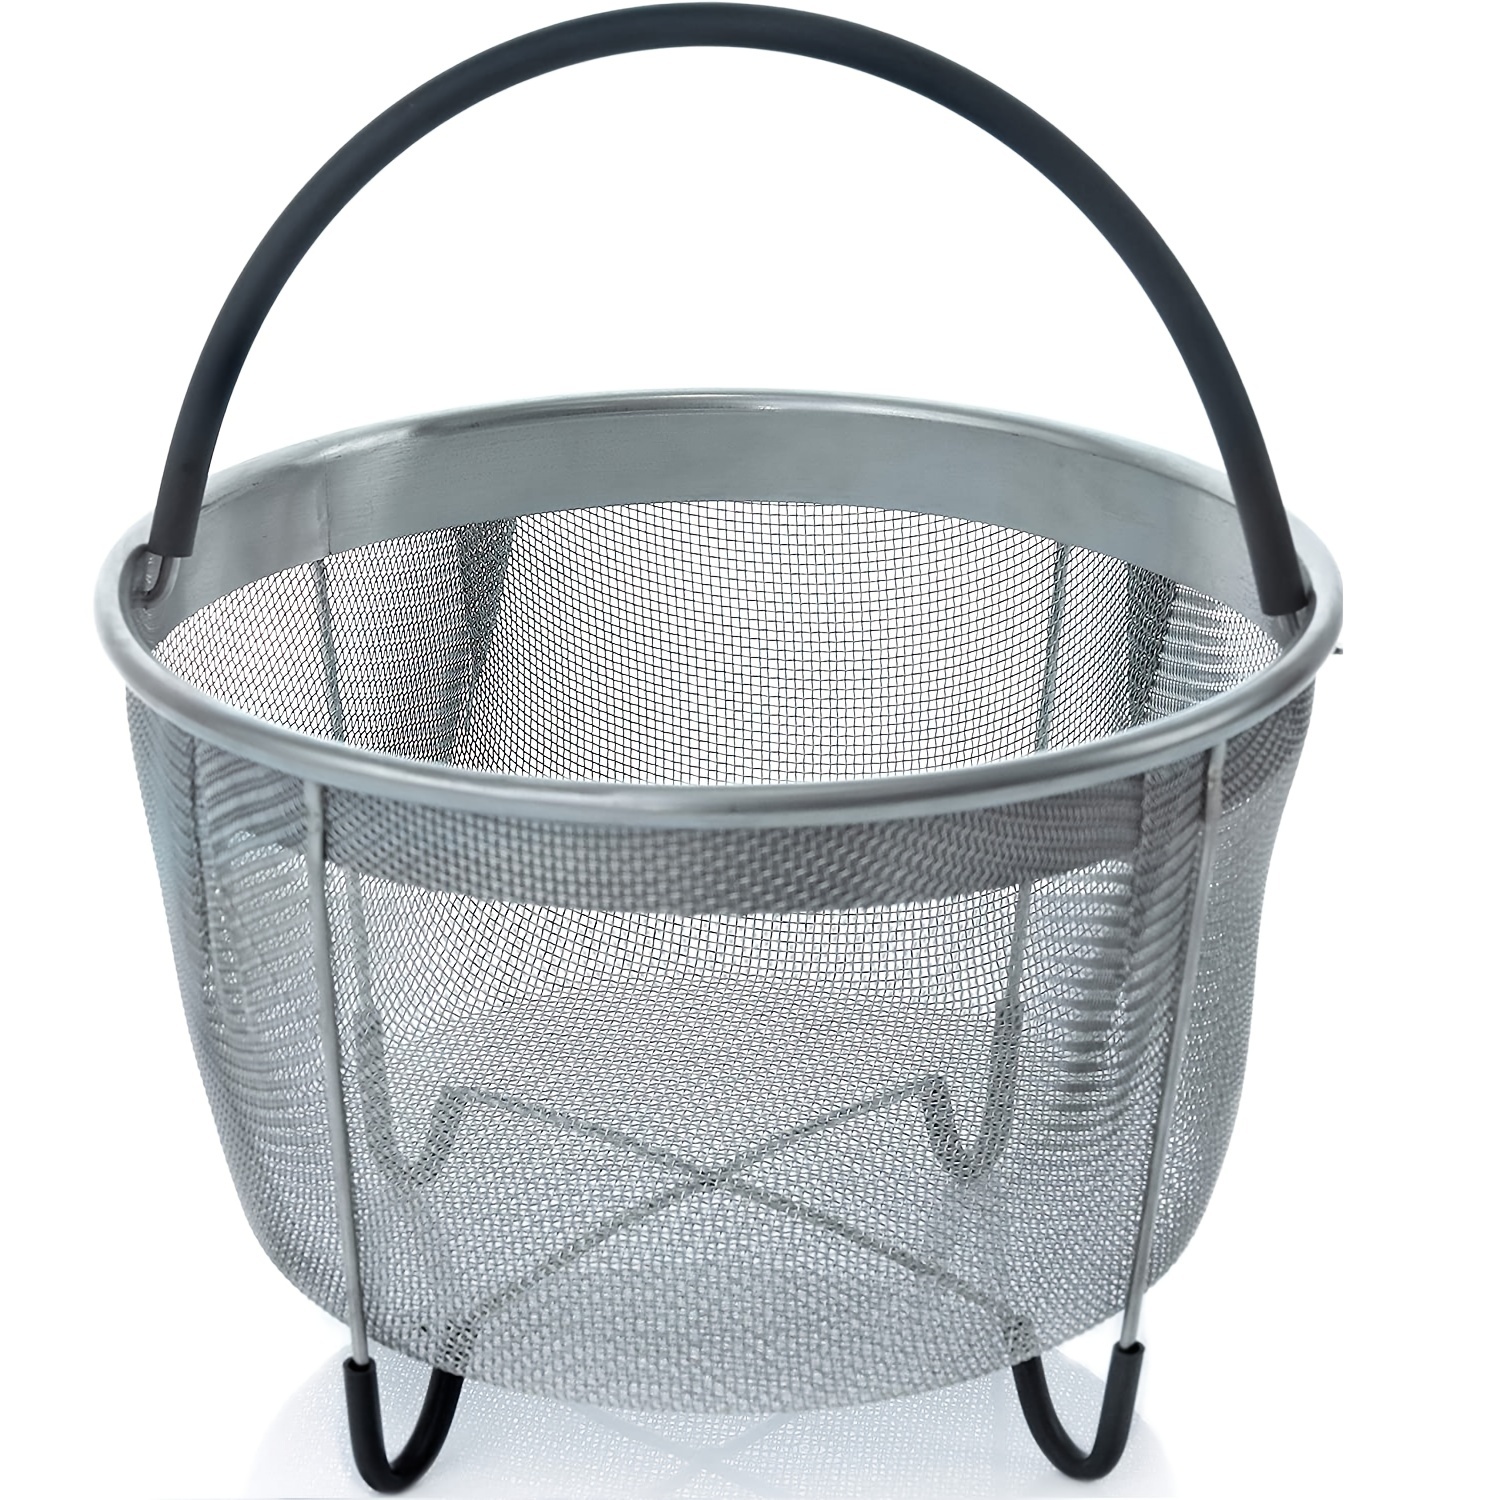  Steamer Basket for Instant Pot Accessories 6 qt or 8